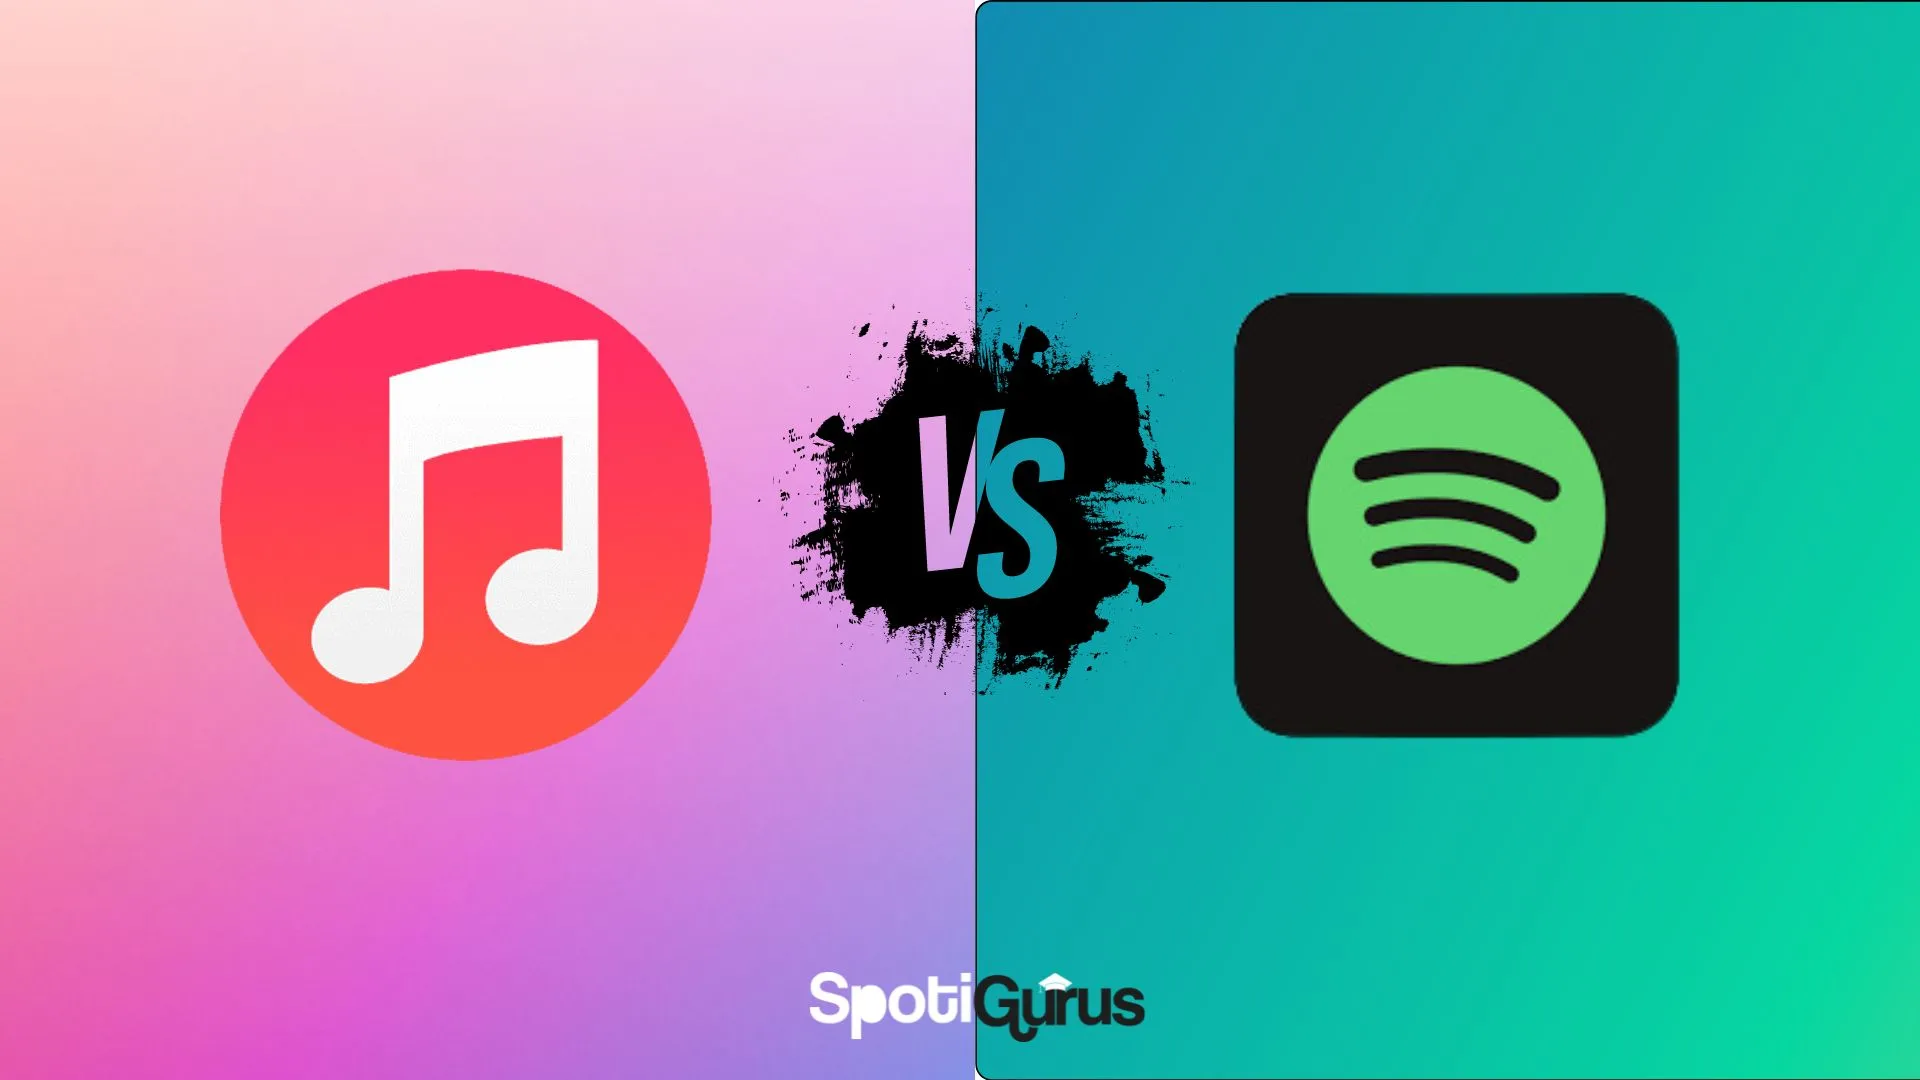 Apple music vs spotify